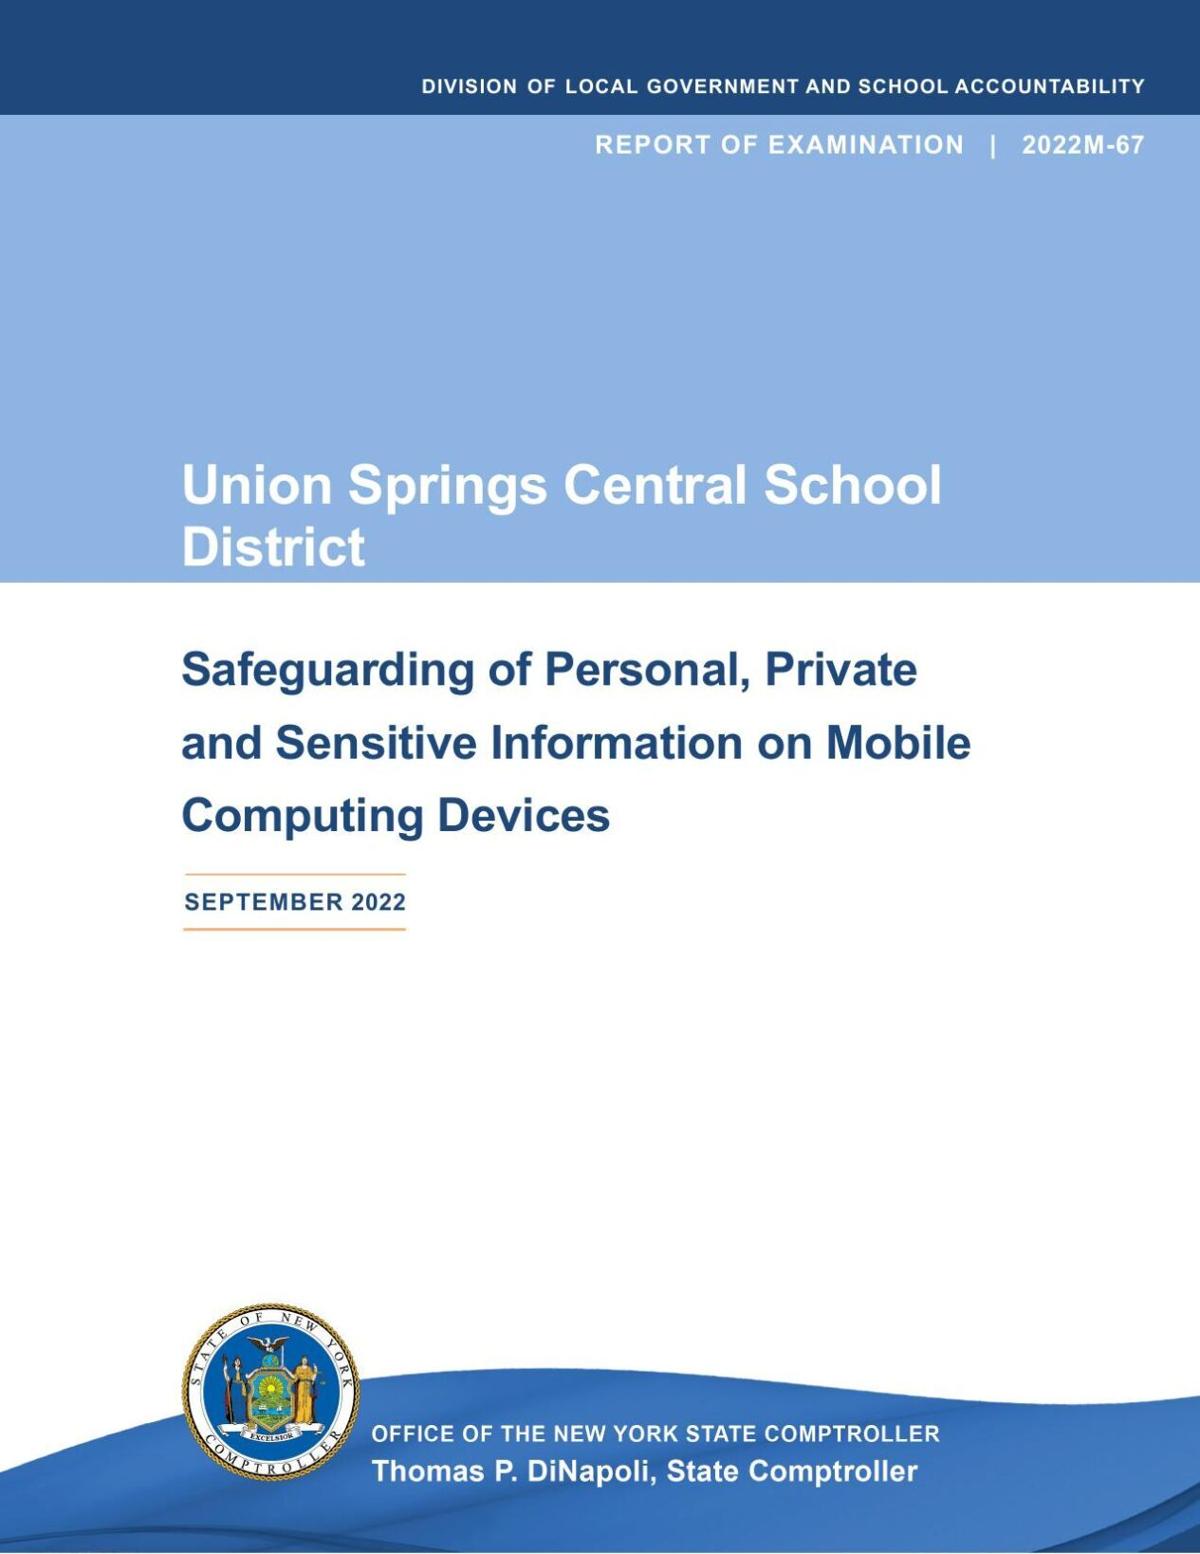 Union Springs audit report